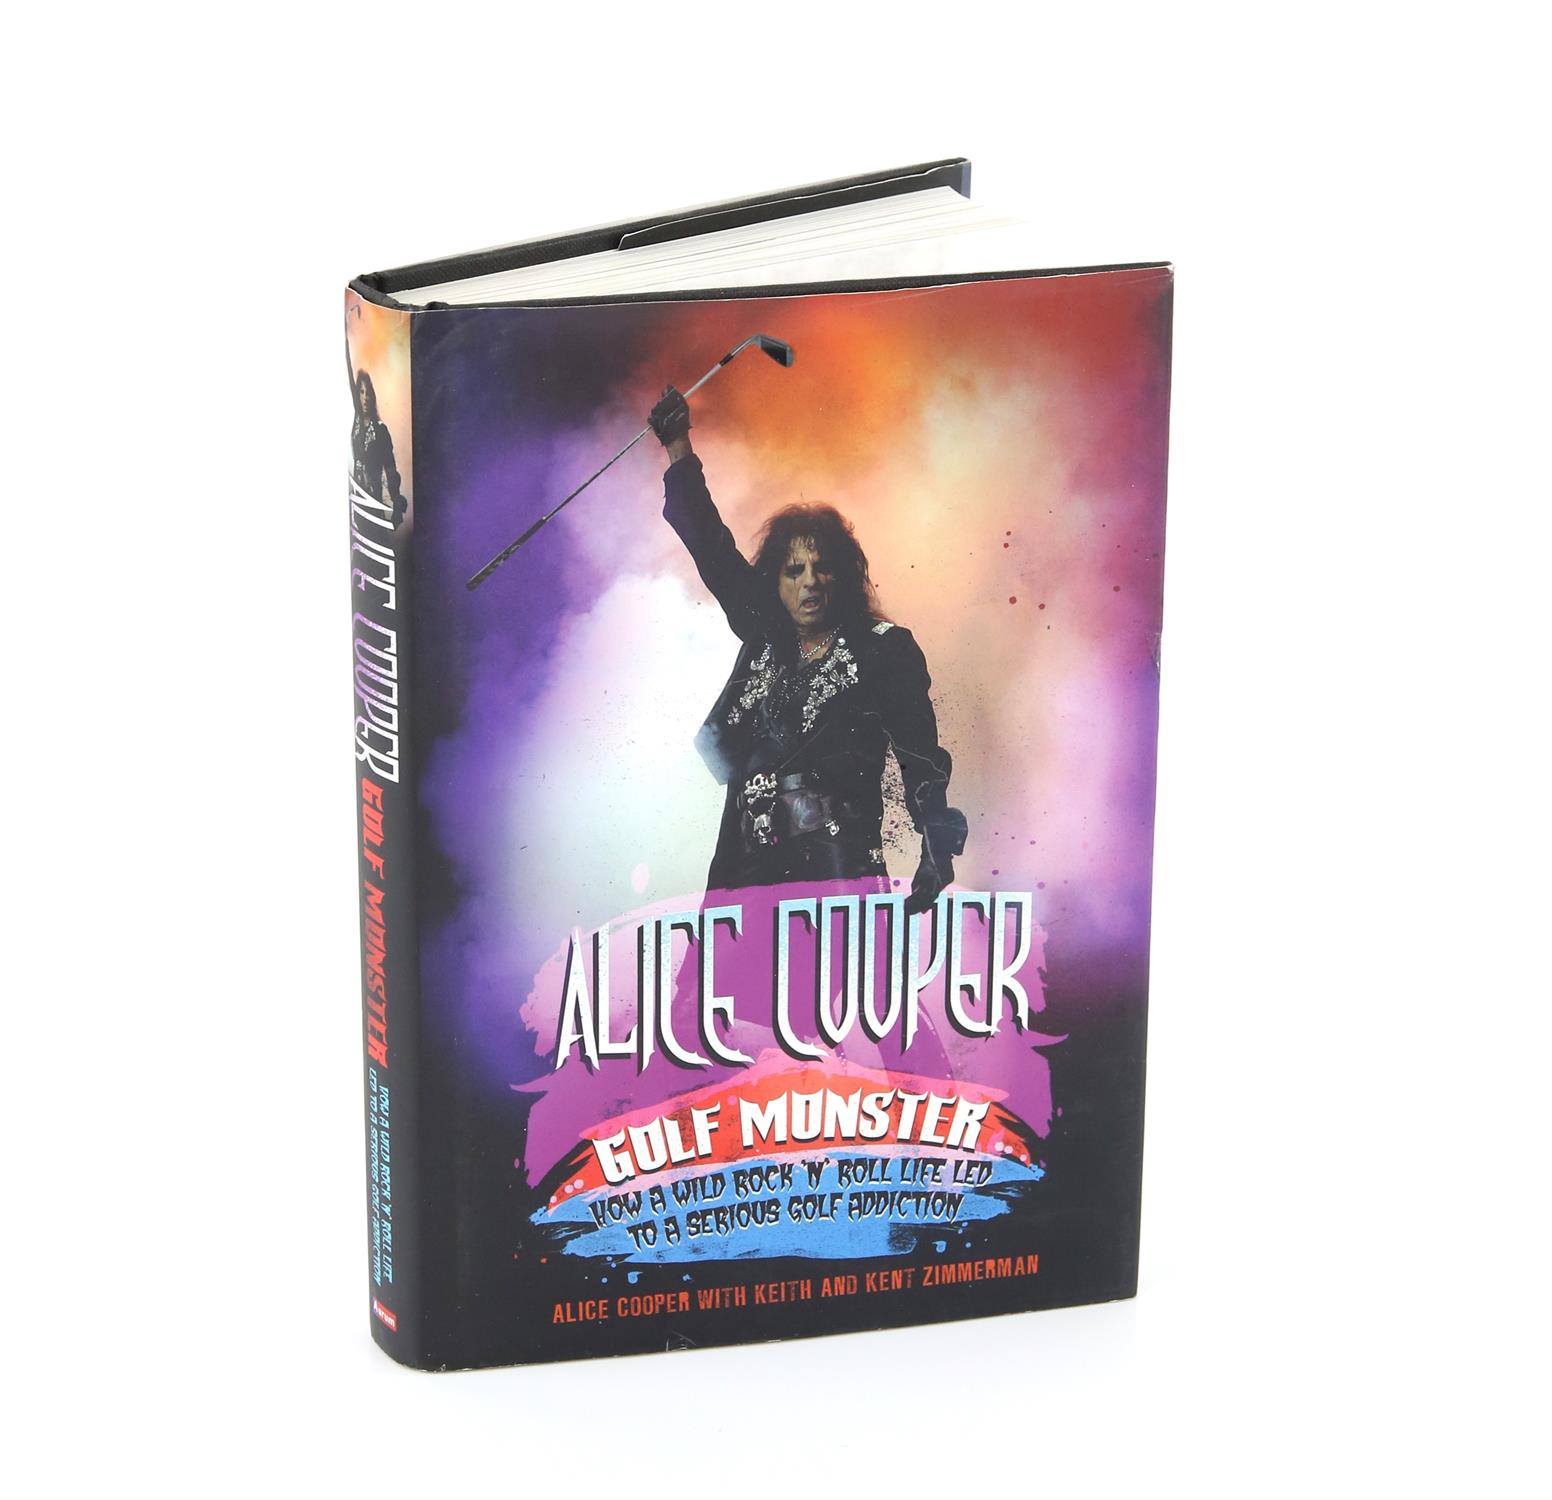 Alice Cooper - Golf Monster signed hardback book from 2007. - Image 2 of 3